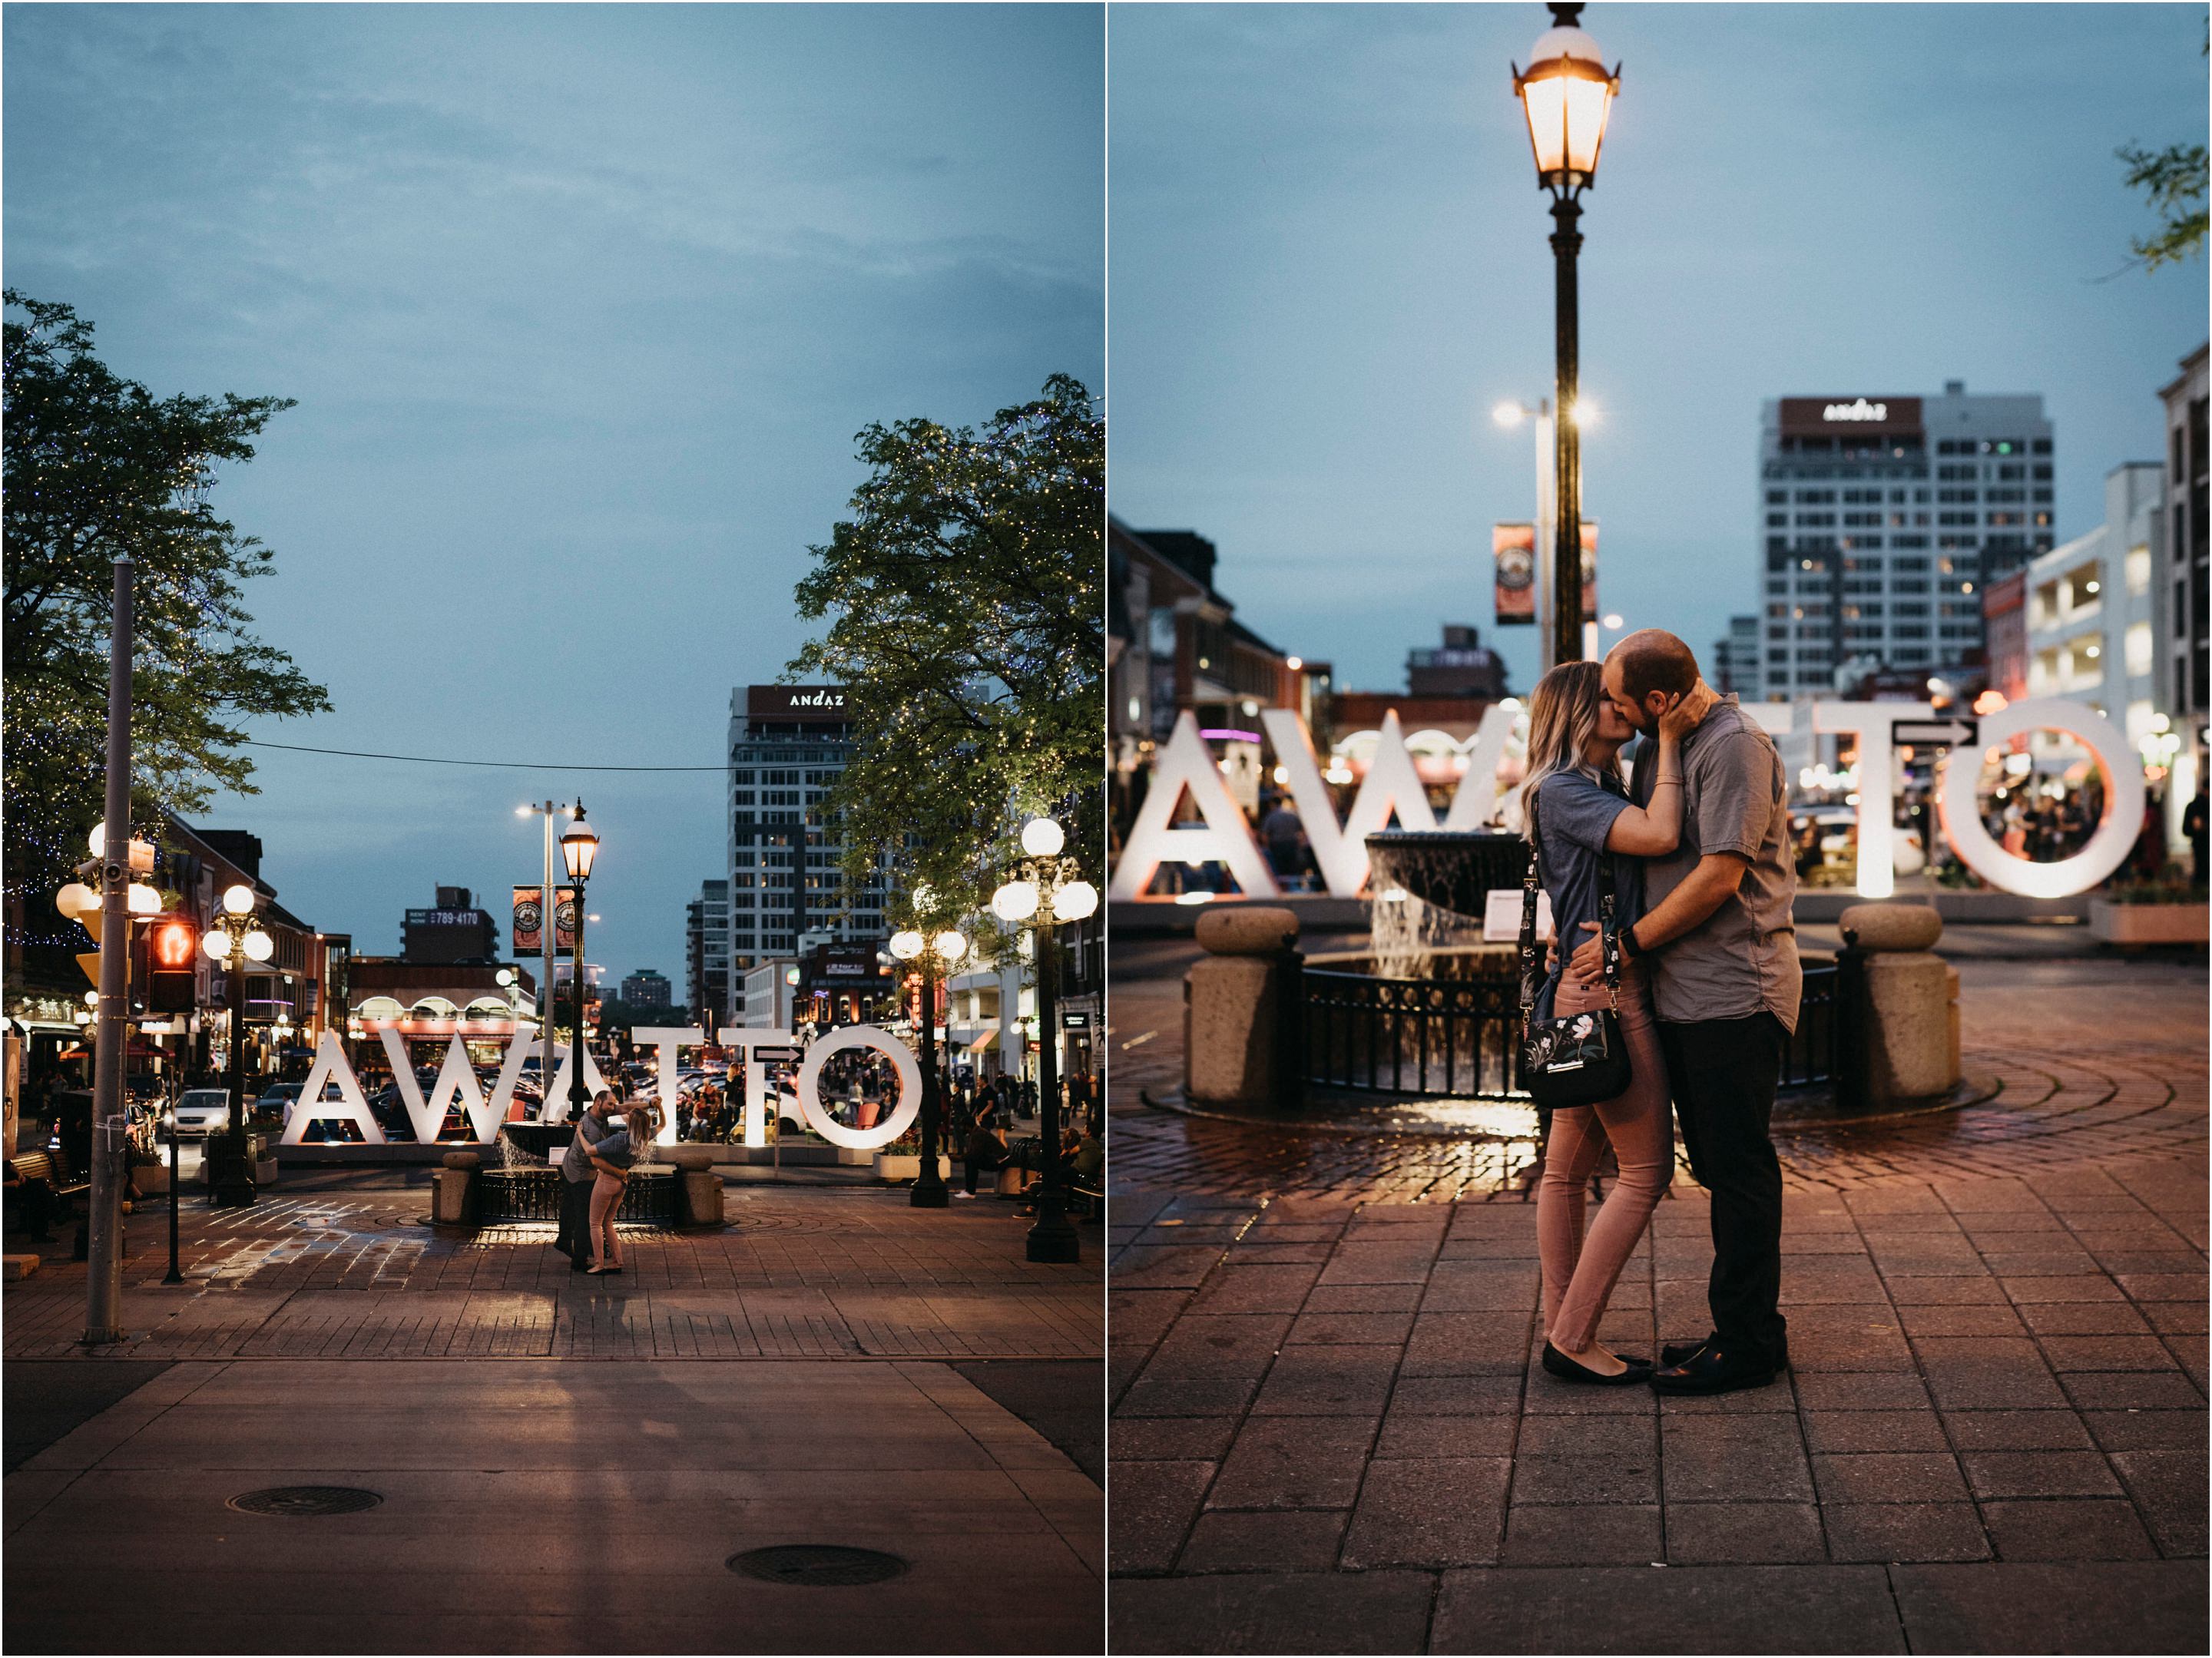 Ottawa Wedding Photographer